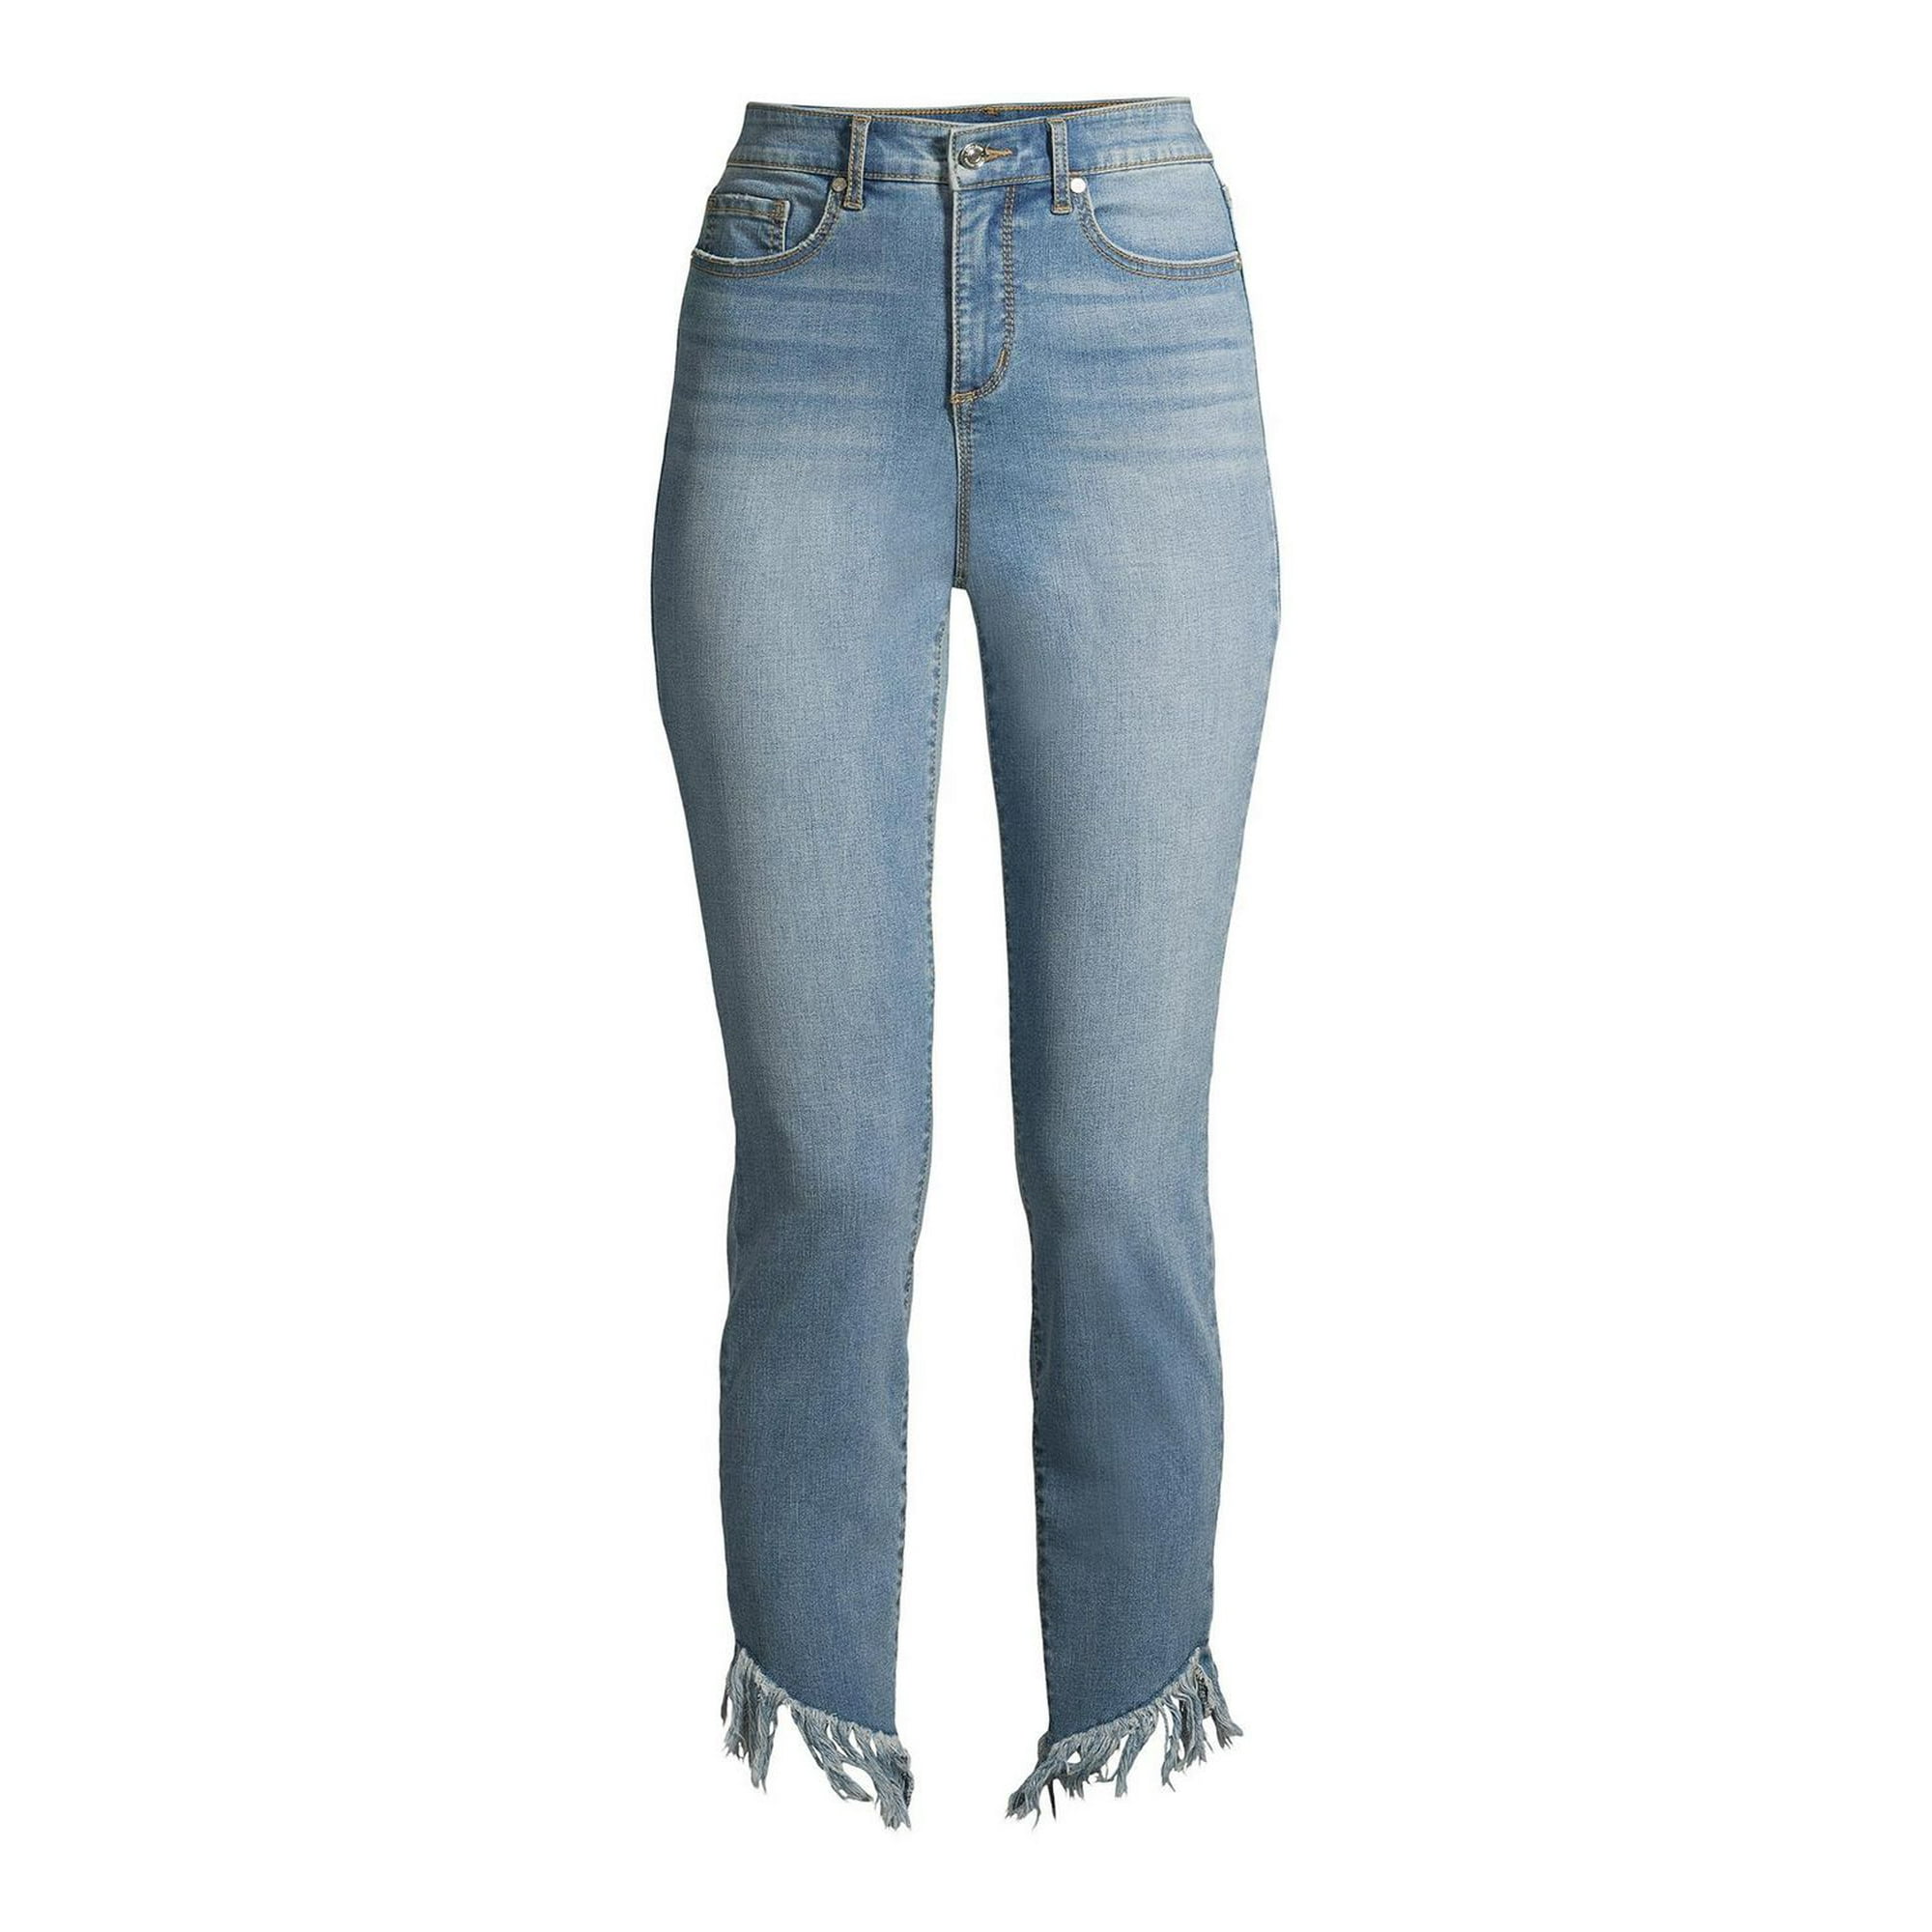 Sofia Jeans by Sofia Vergara at Walmart